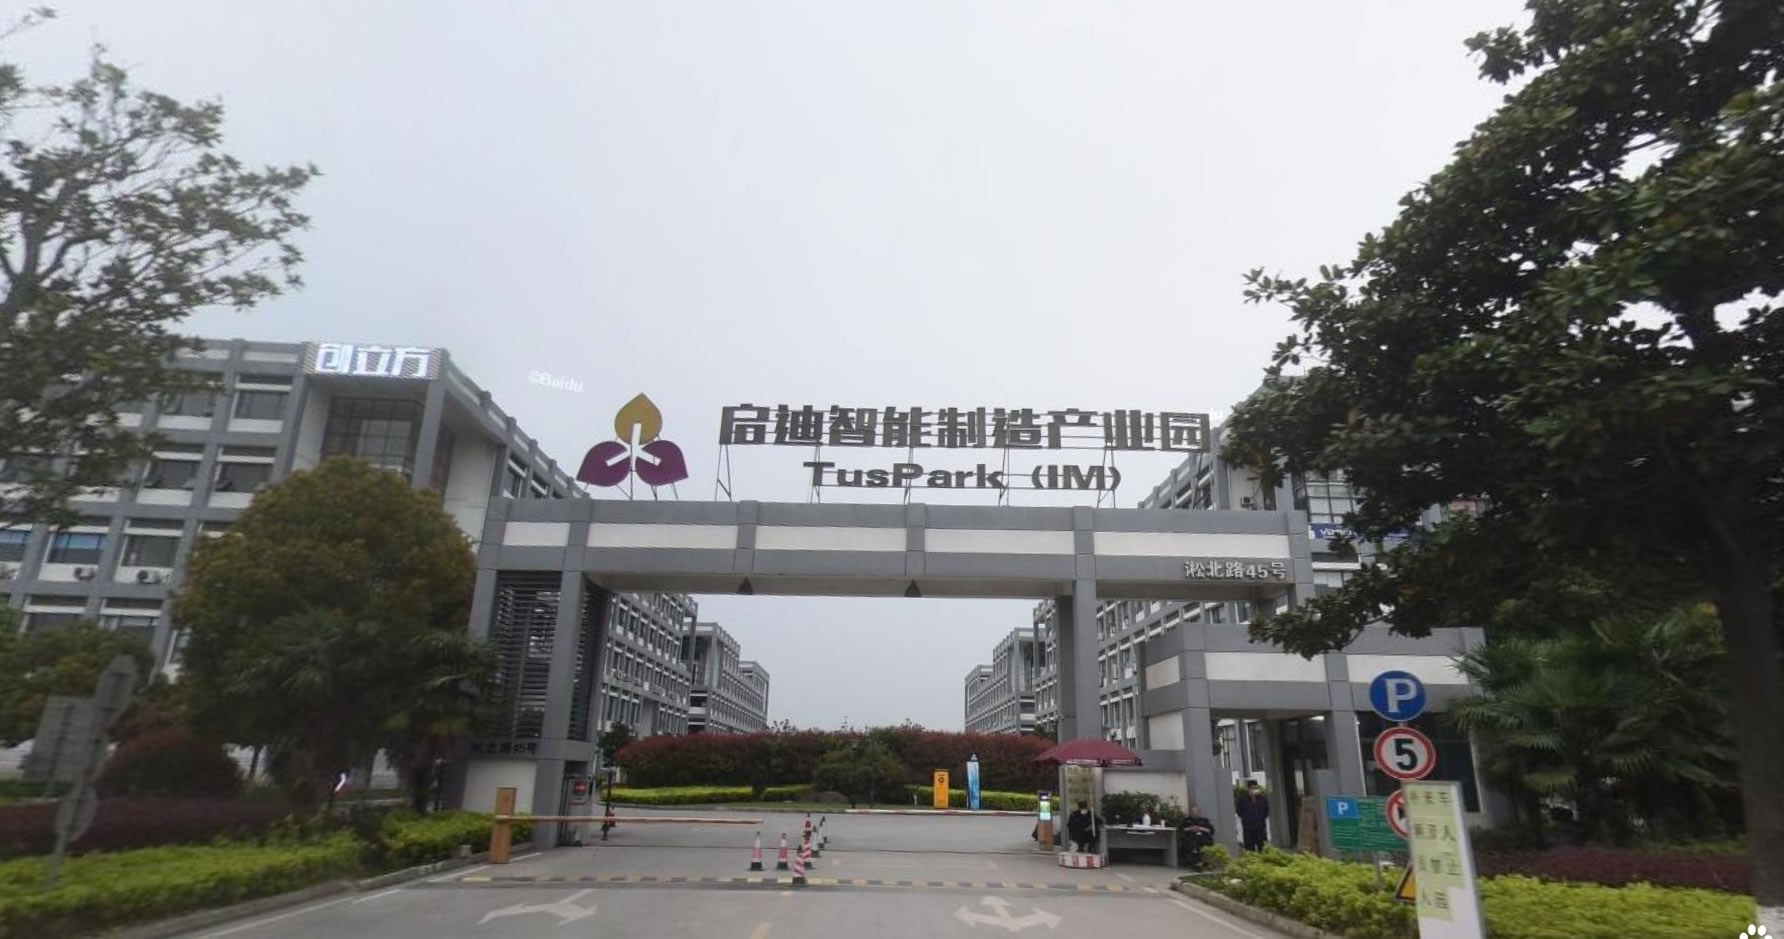  Jiangsu Wbson  Electric Power Technology Co., Ltd